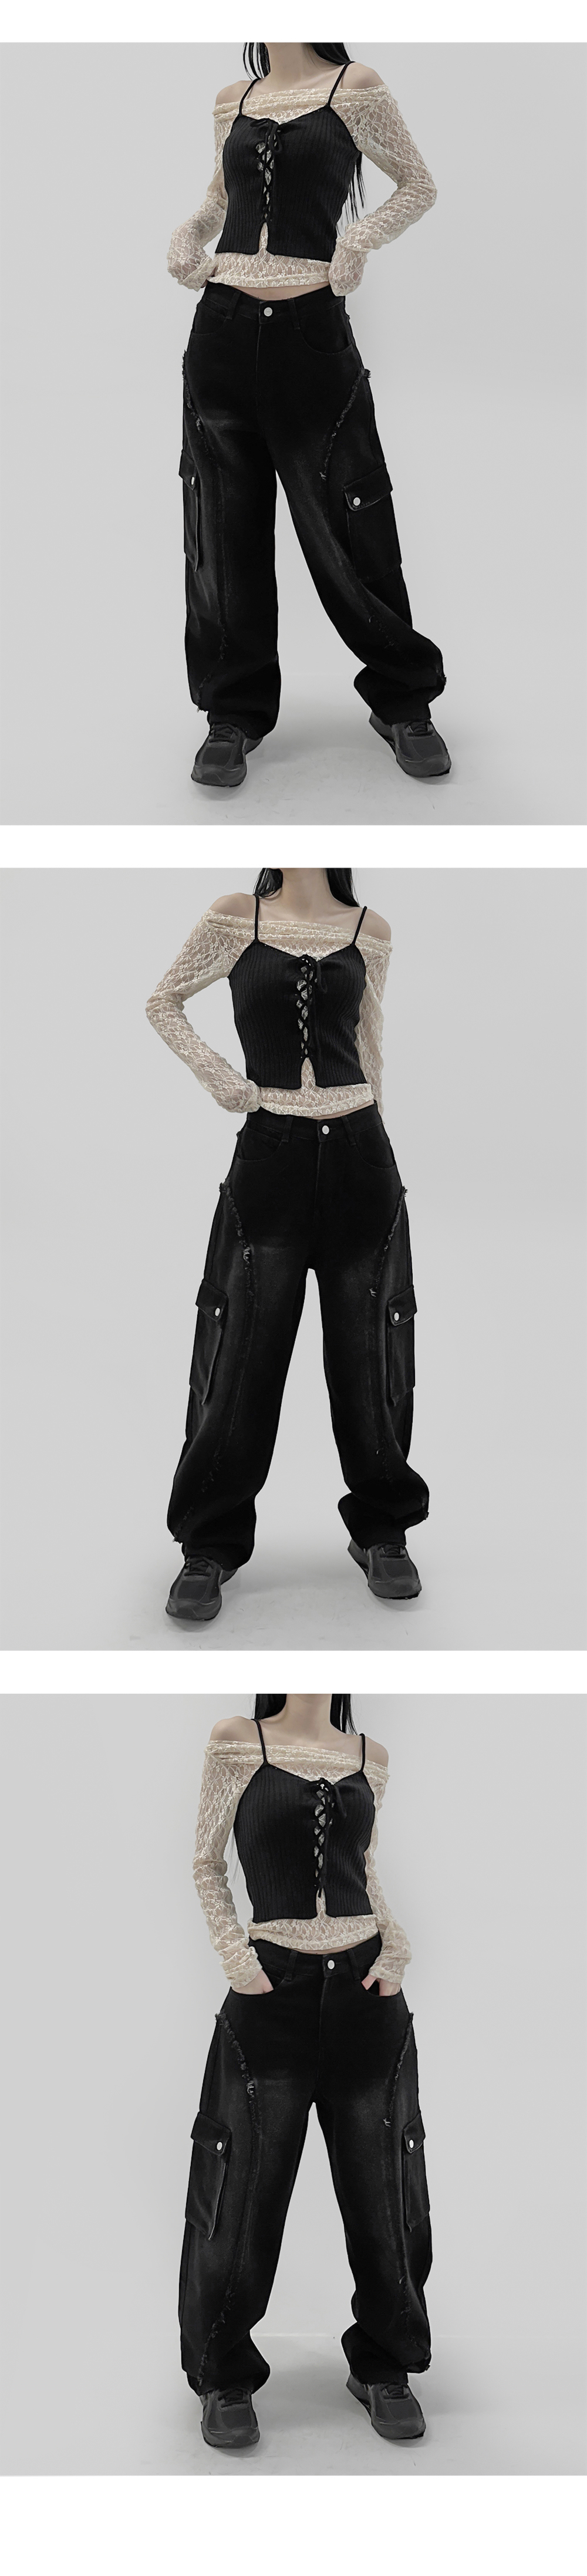 suspenders skirt/pants charcoal color image-S1L15